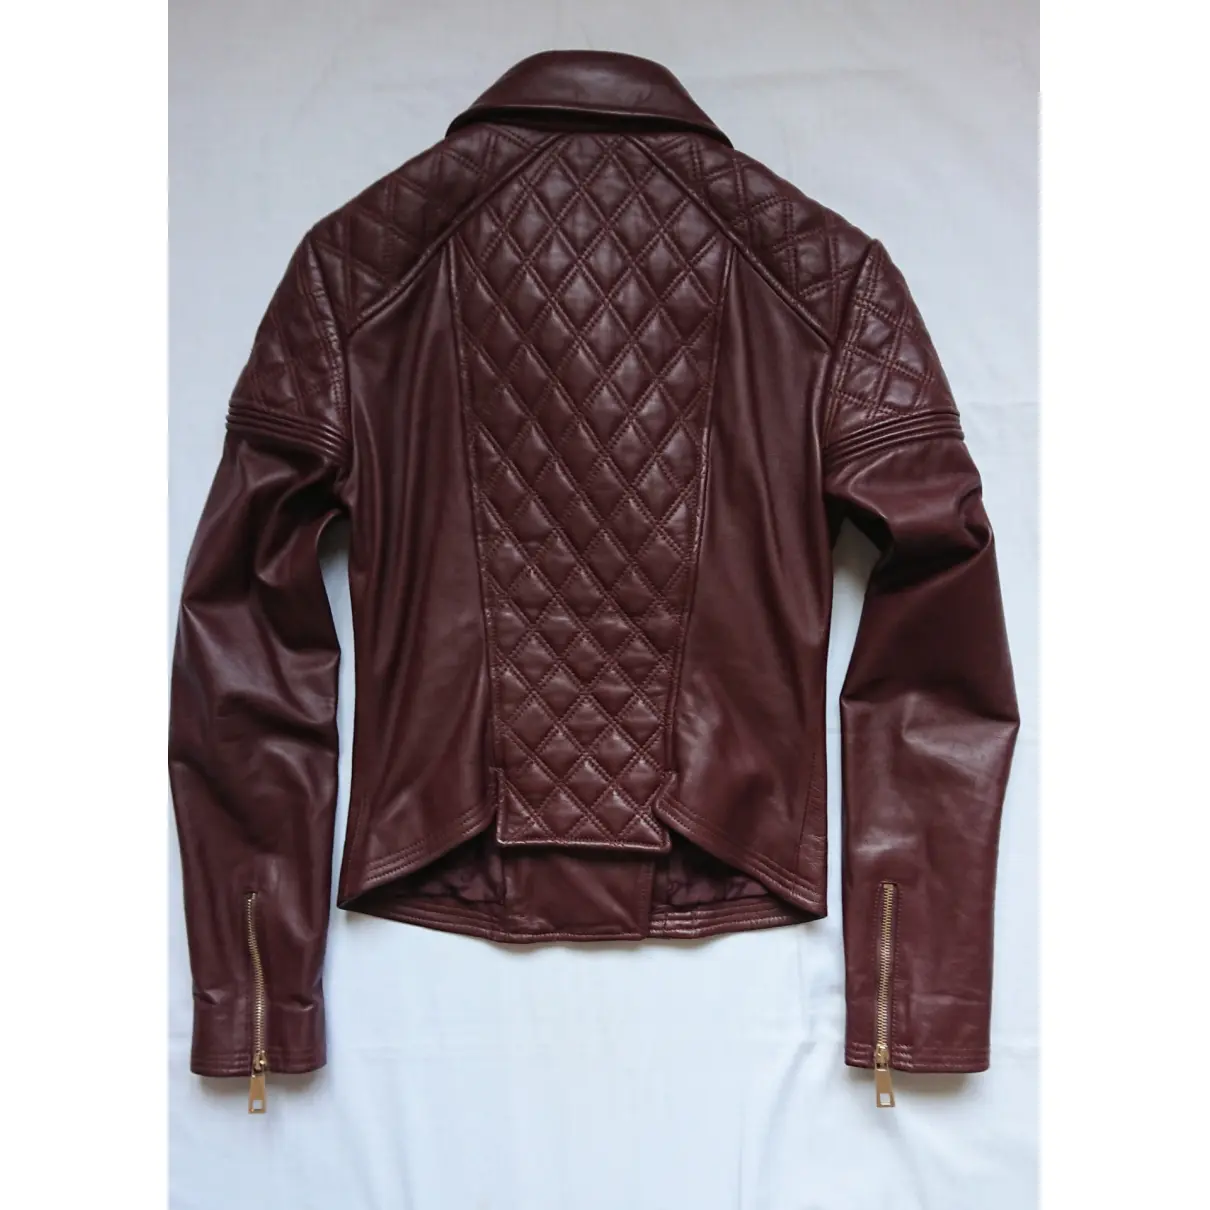 Buy Temperley London Leather jacket online